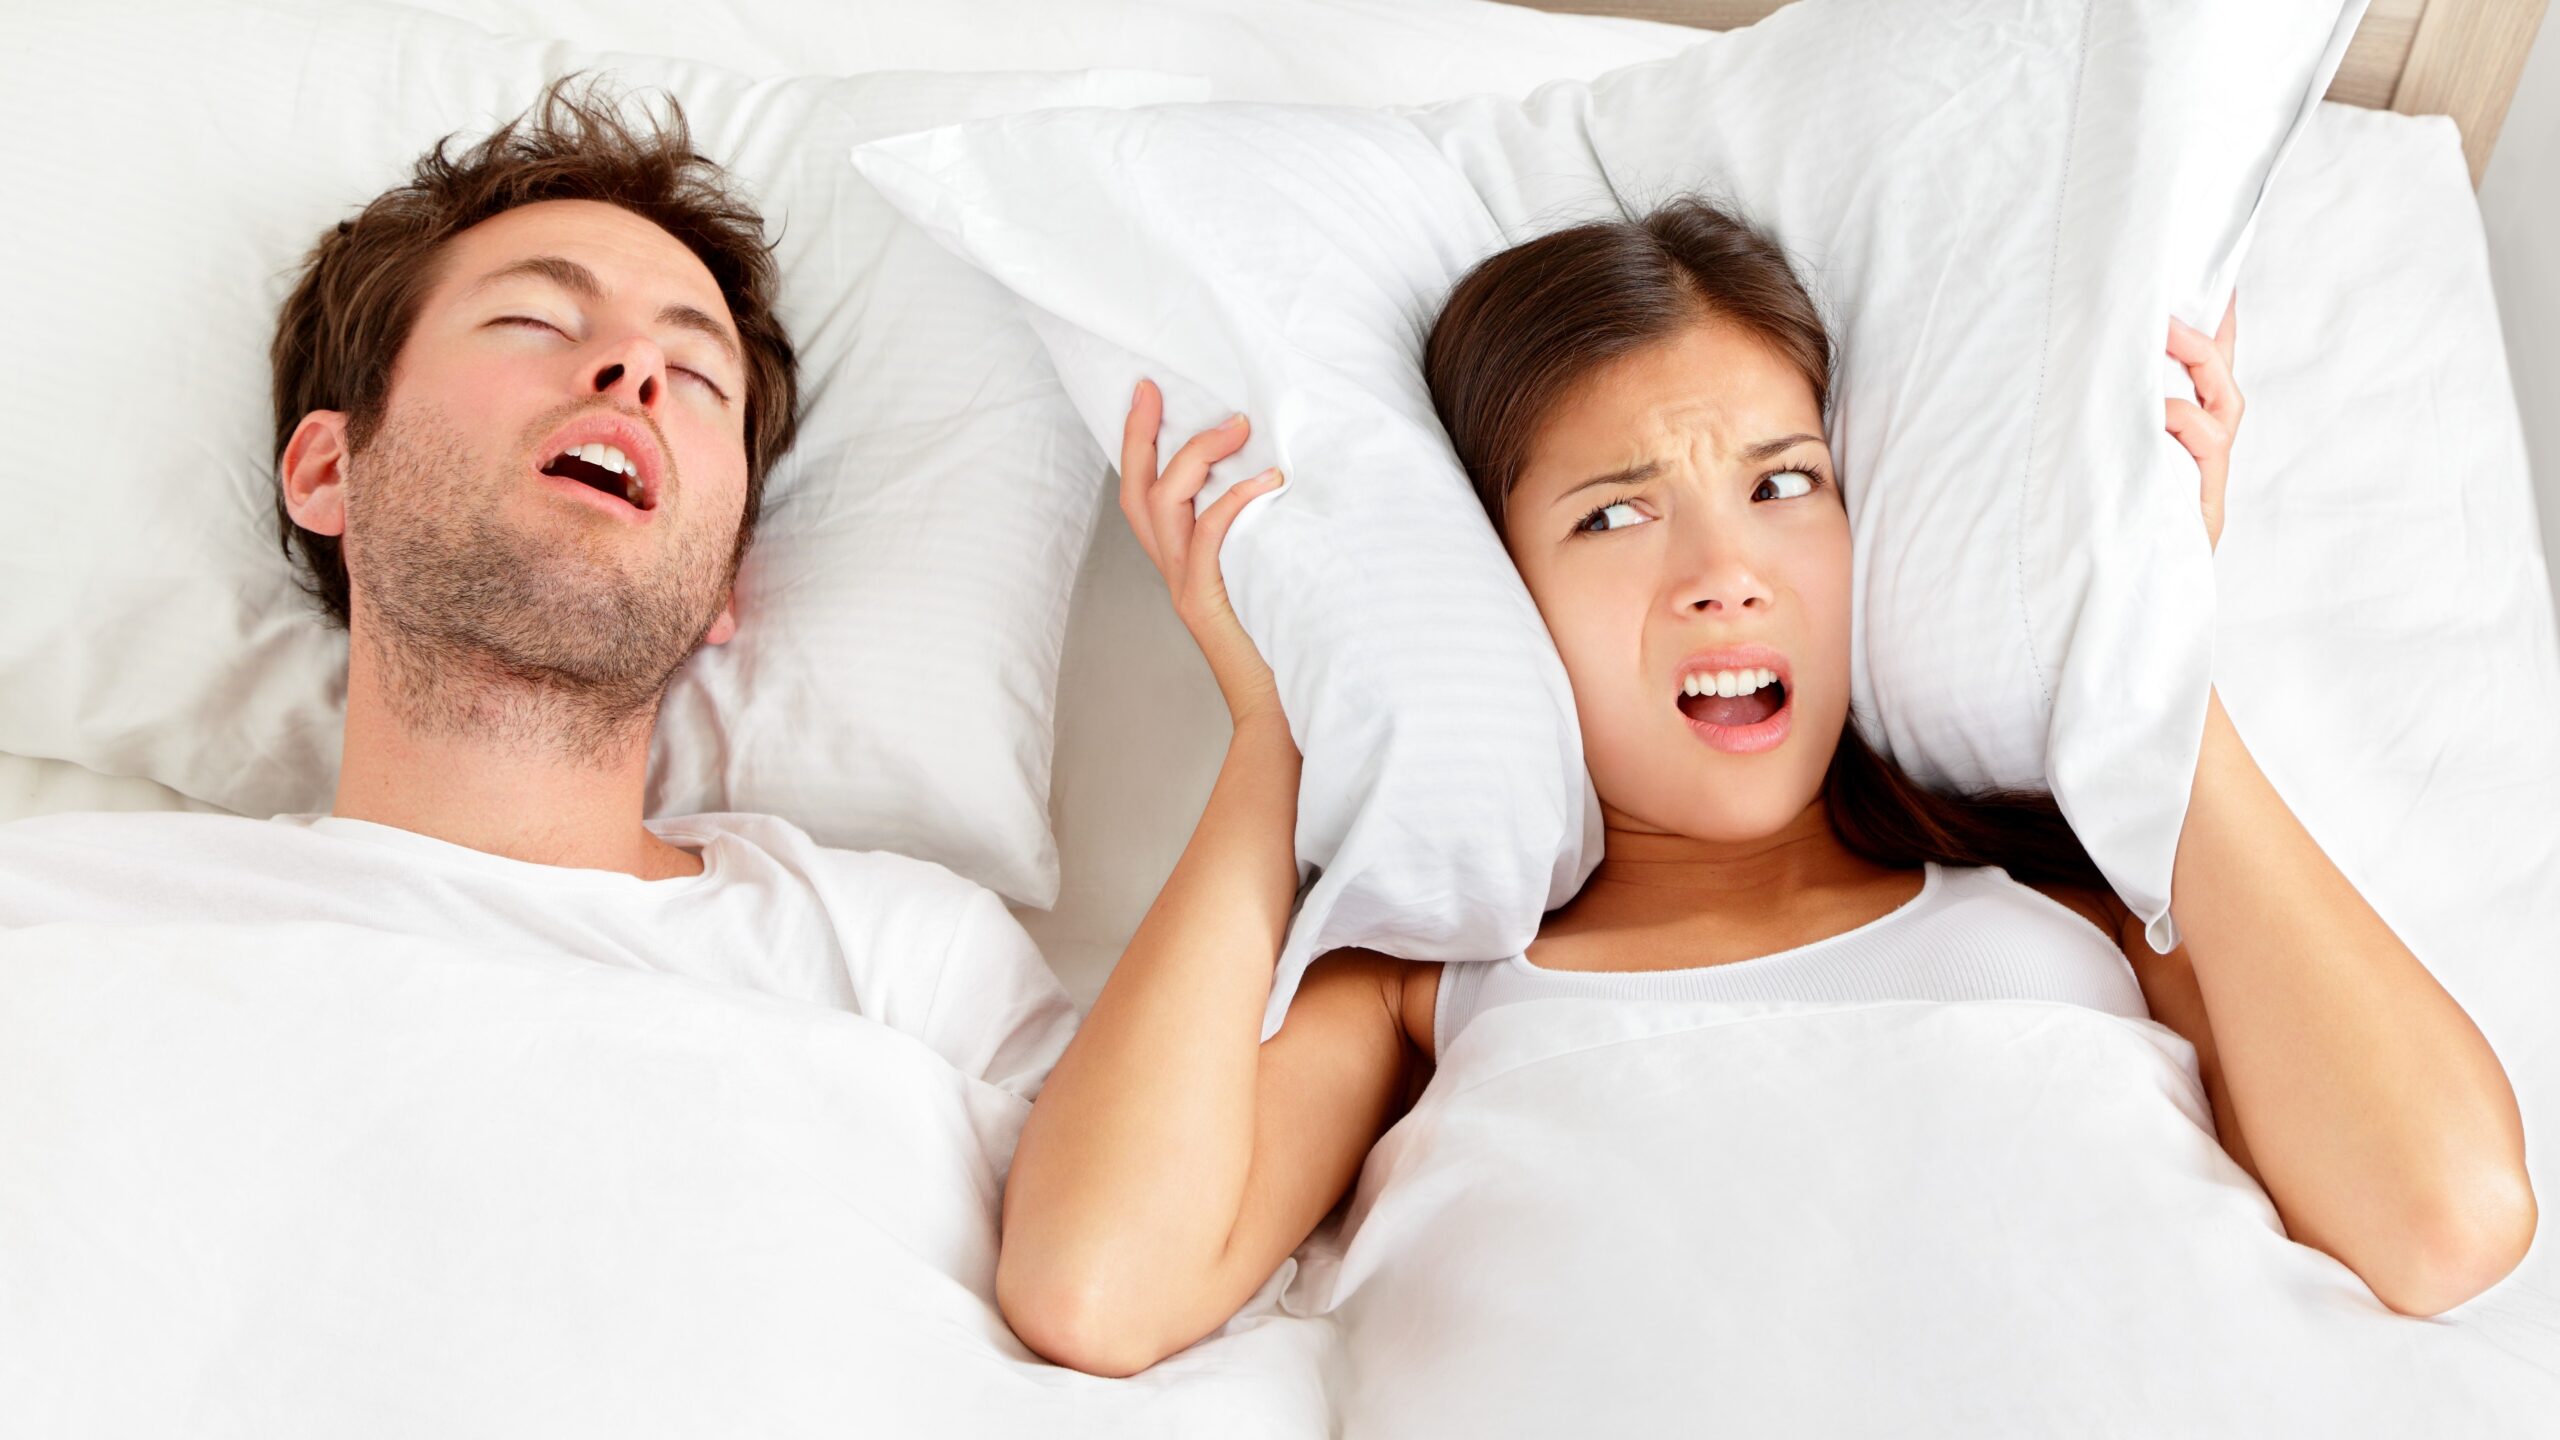 Couple in bed with the man having sleep apnea